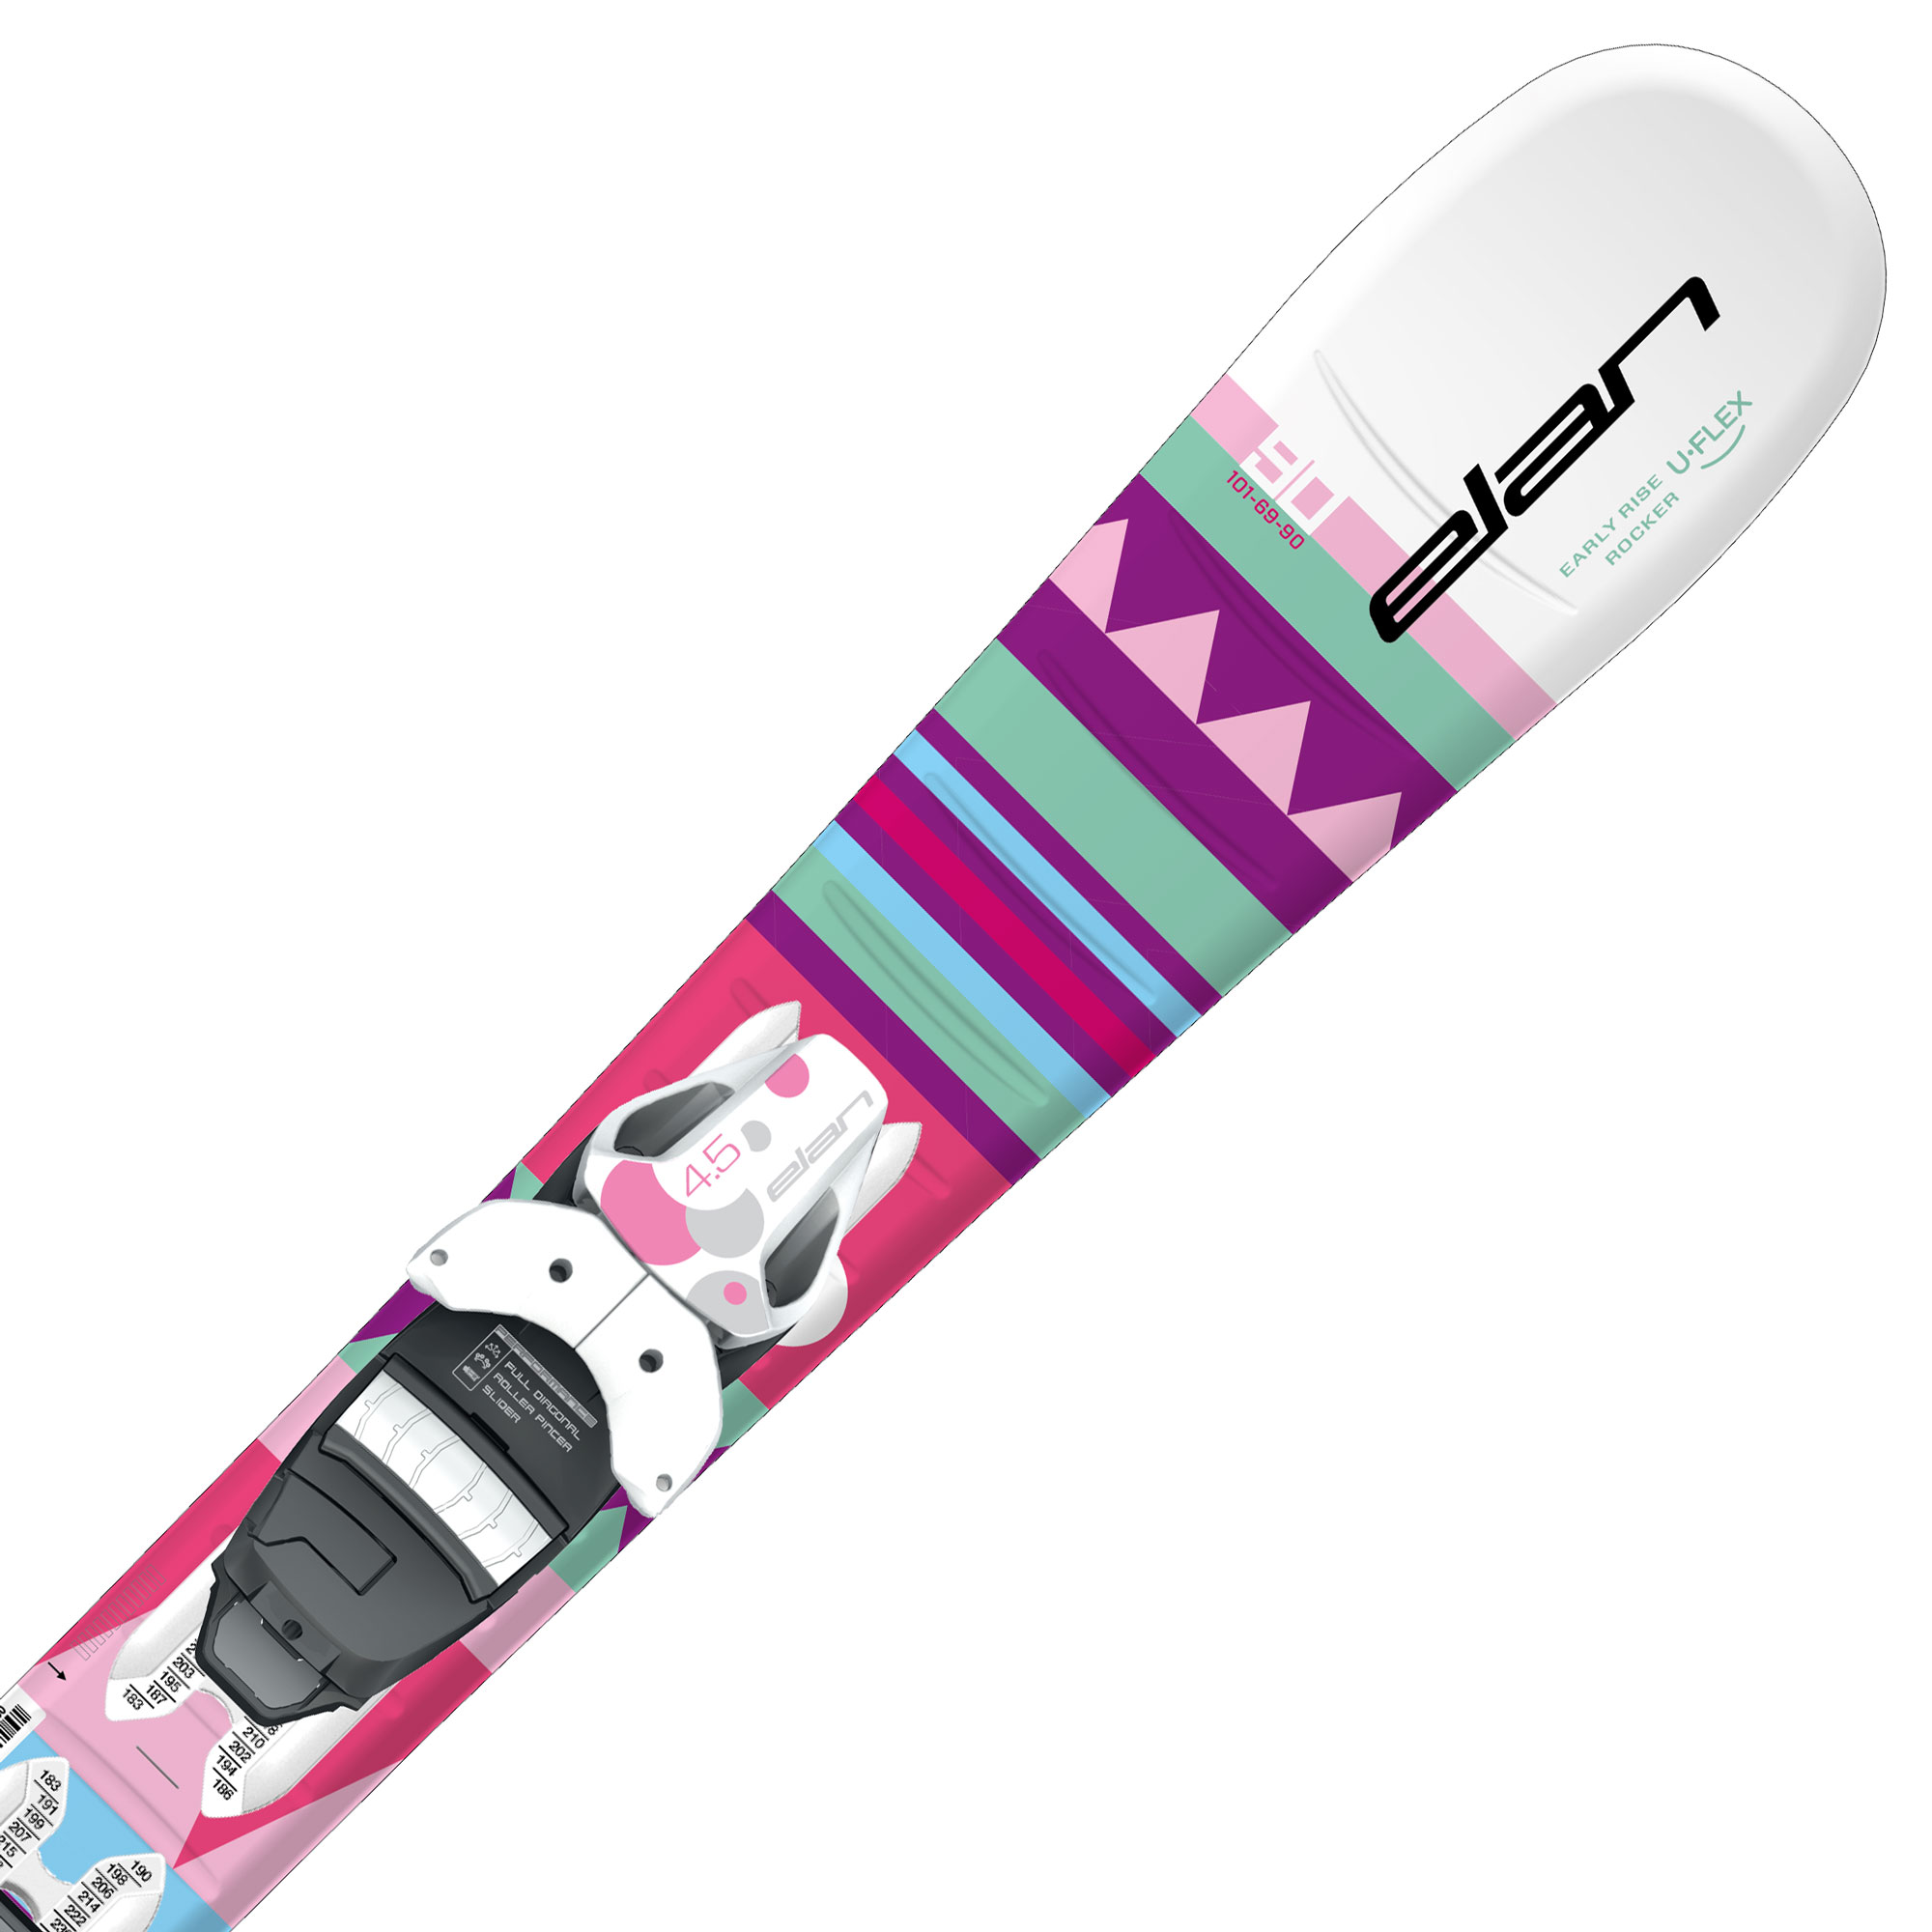 Dievčenské zjazdové lyže